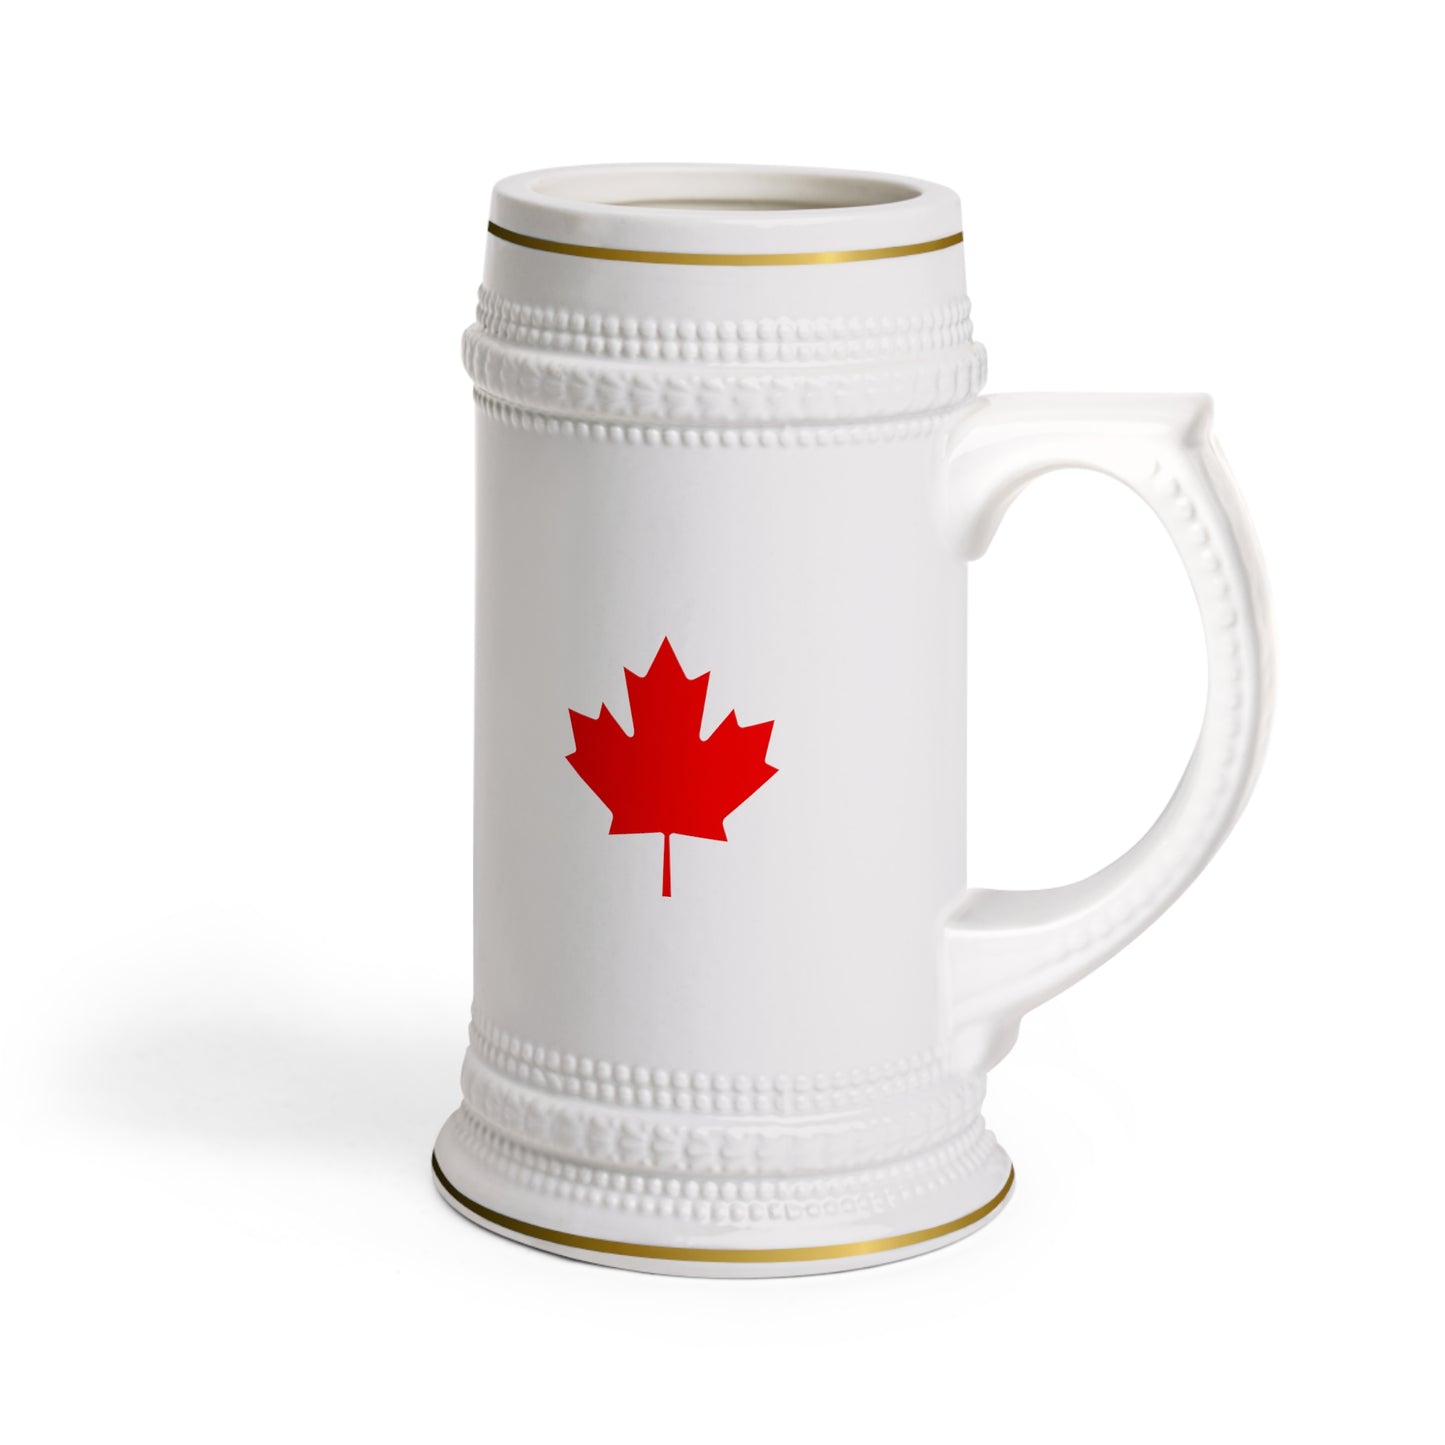 Beer Stein Mug, Canadian Maple Leaf